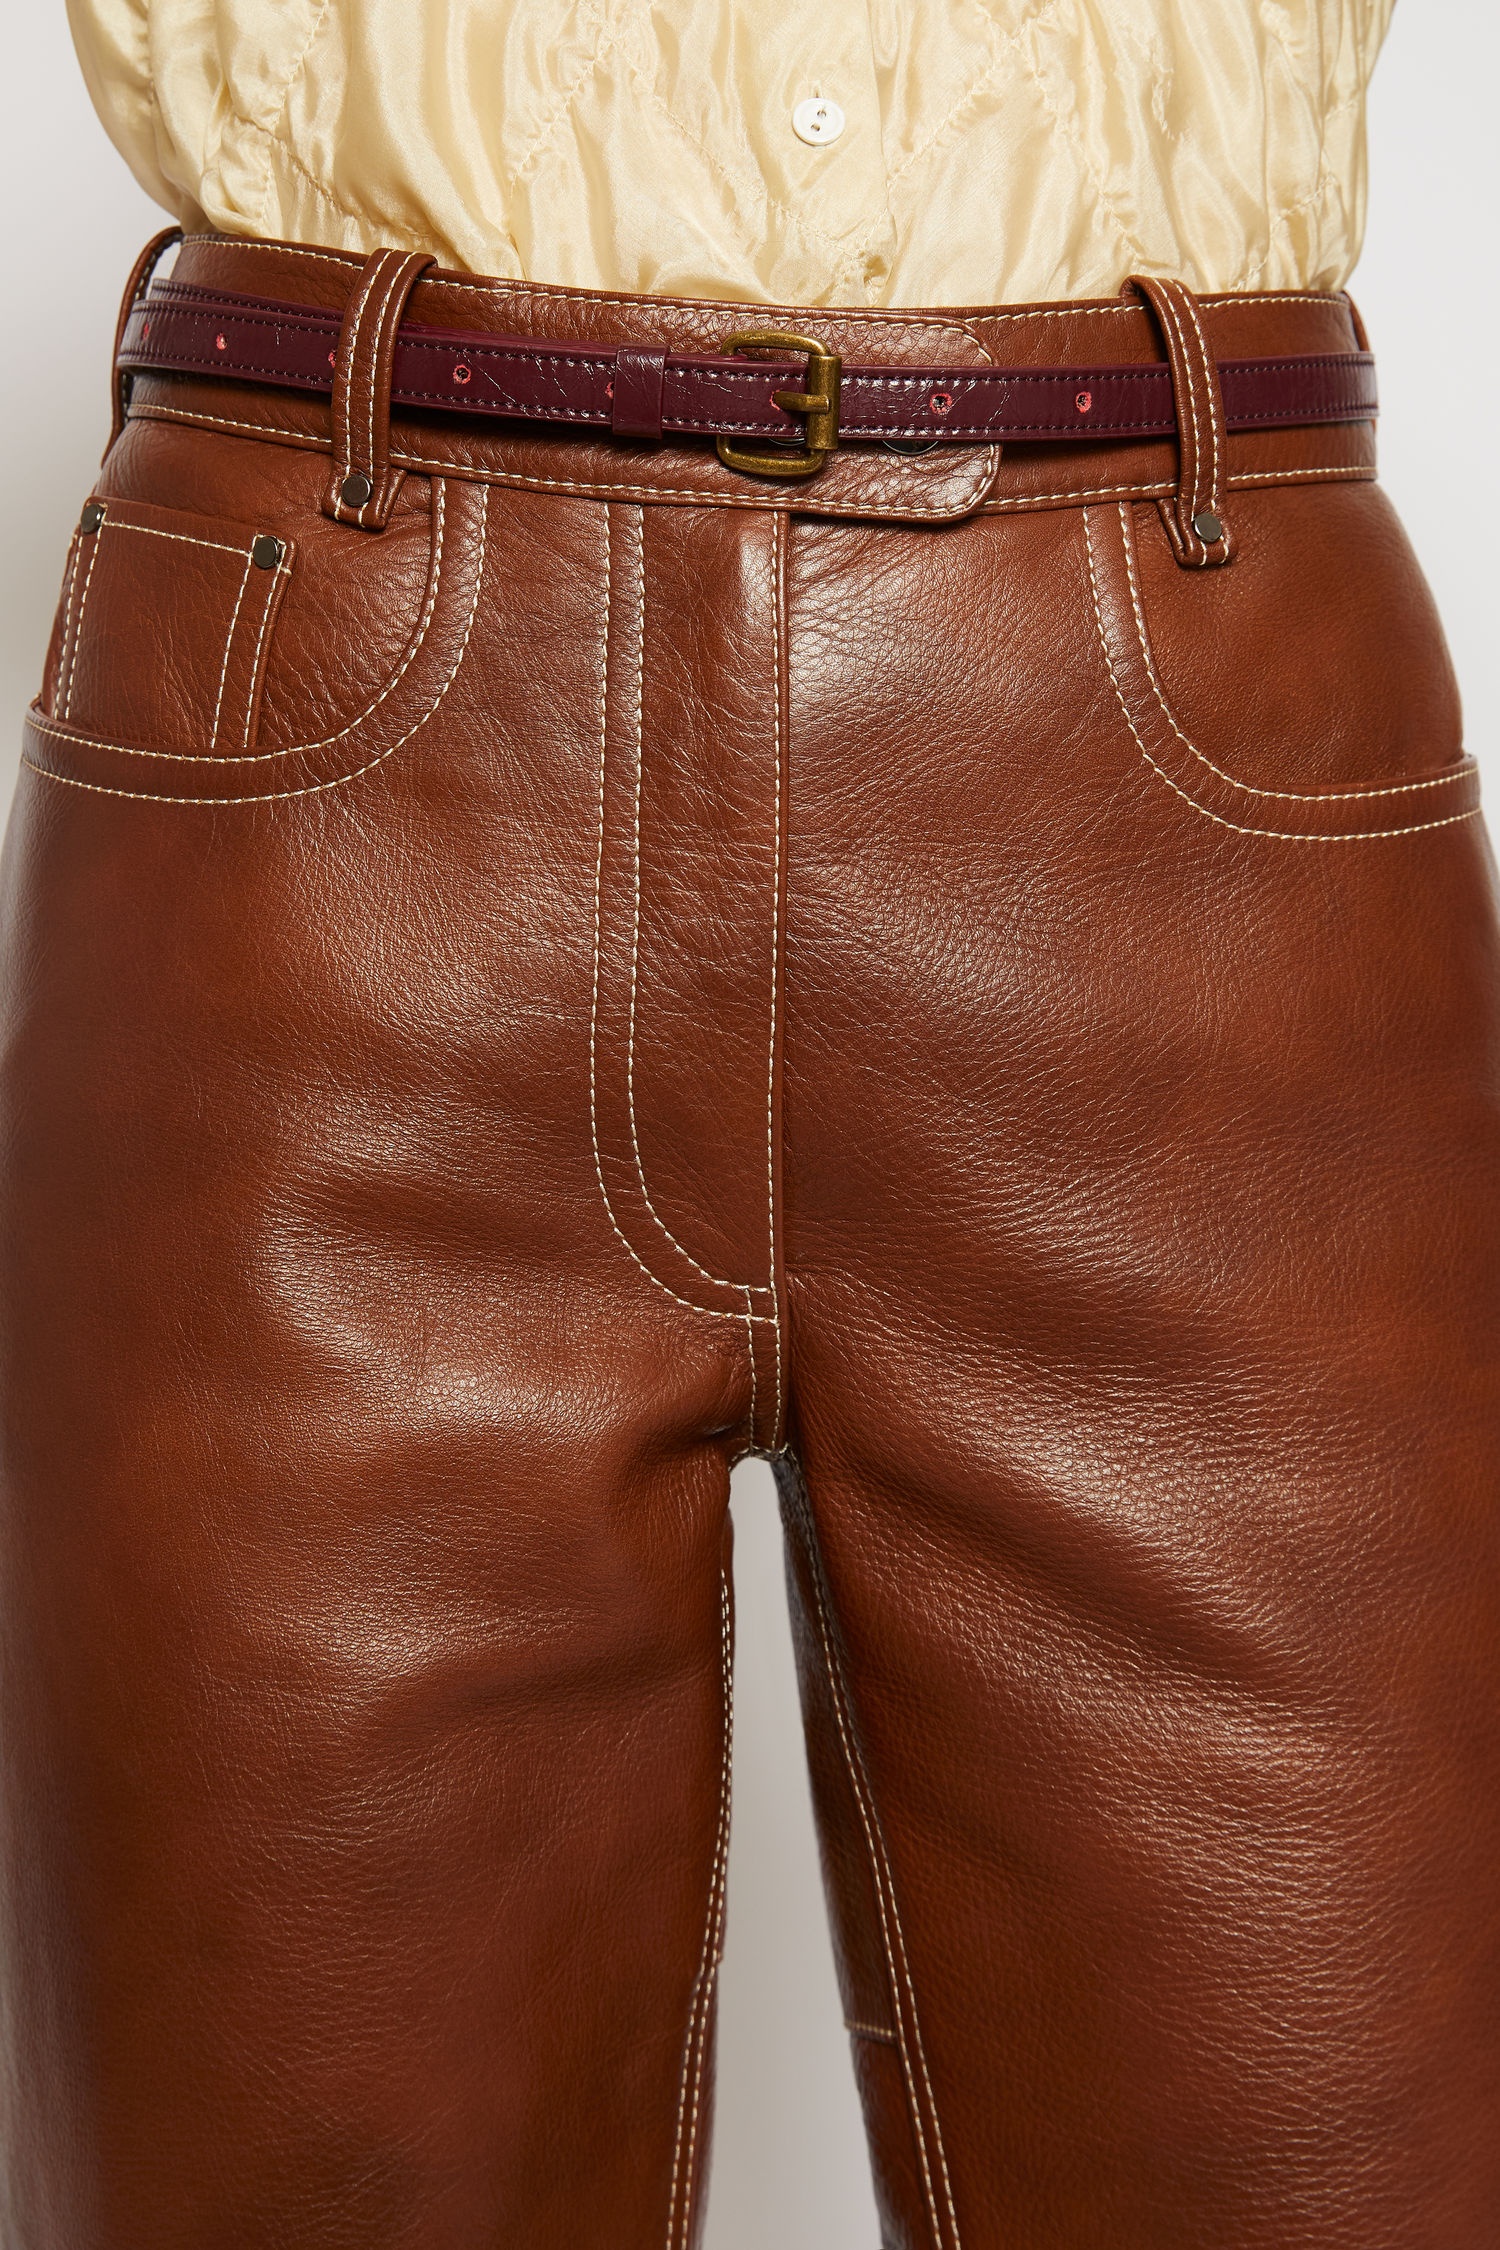 Slim cracked leather belt red - 2